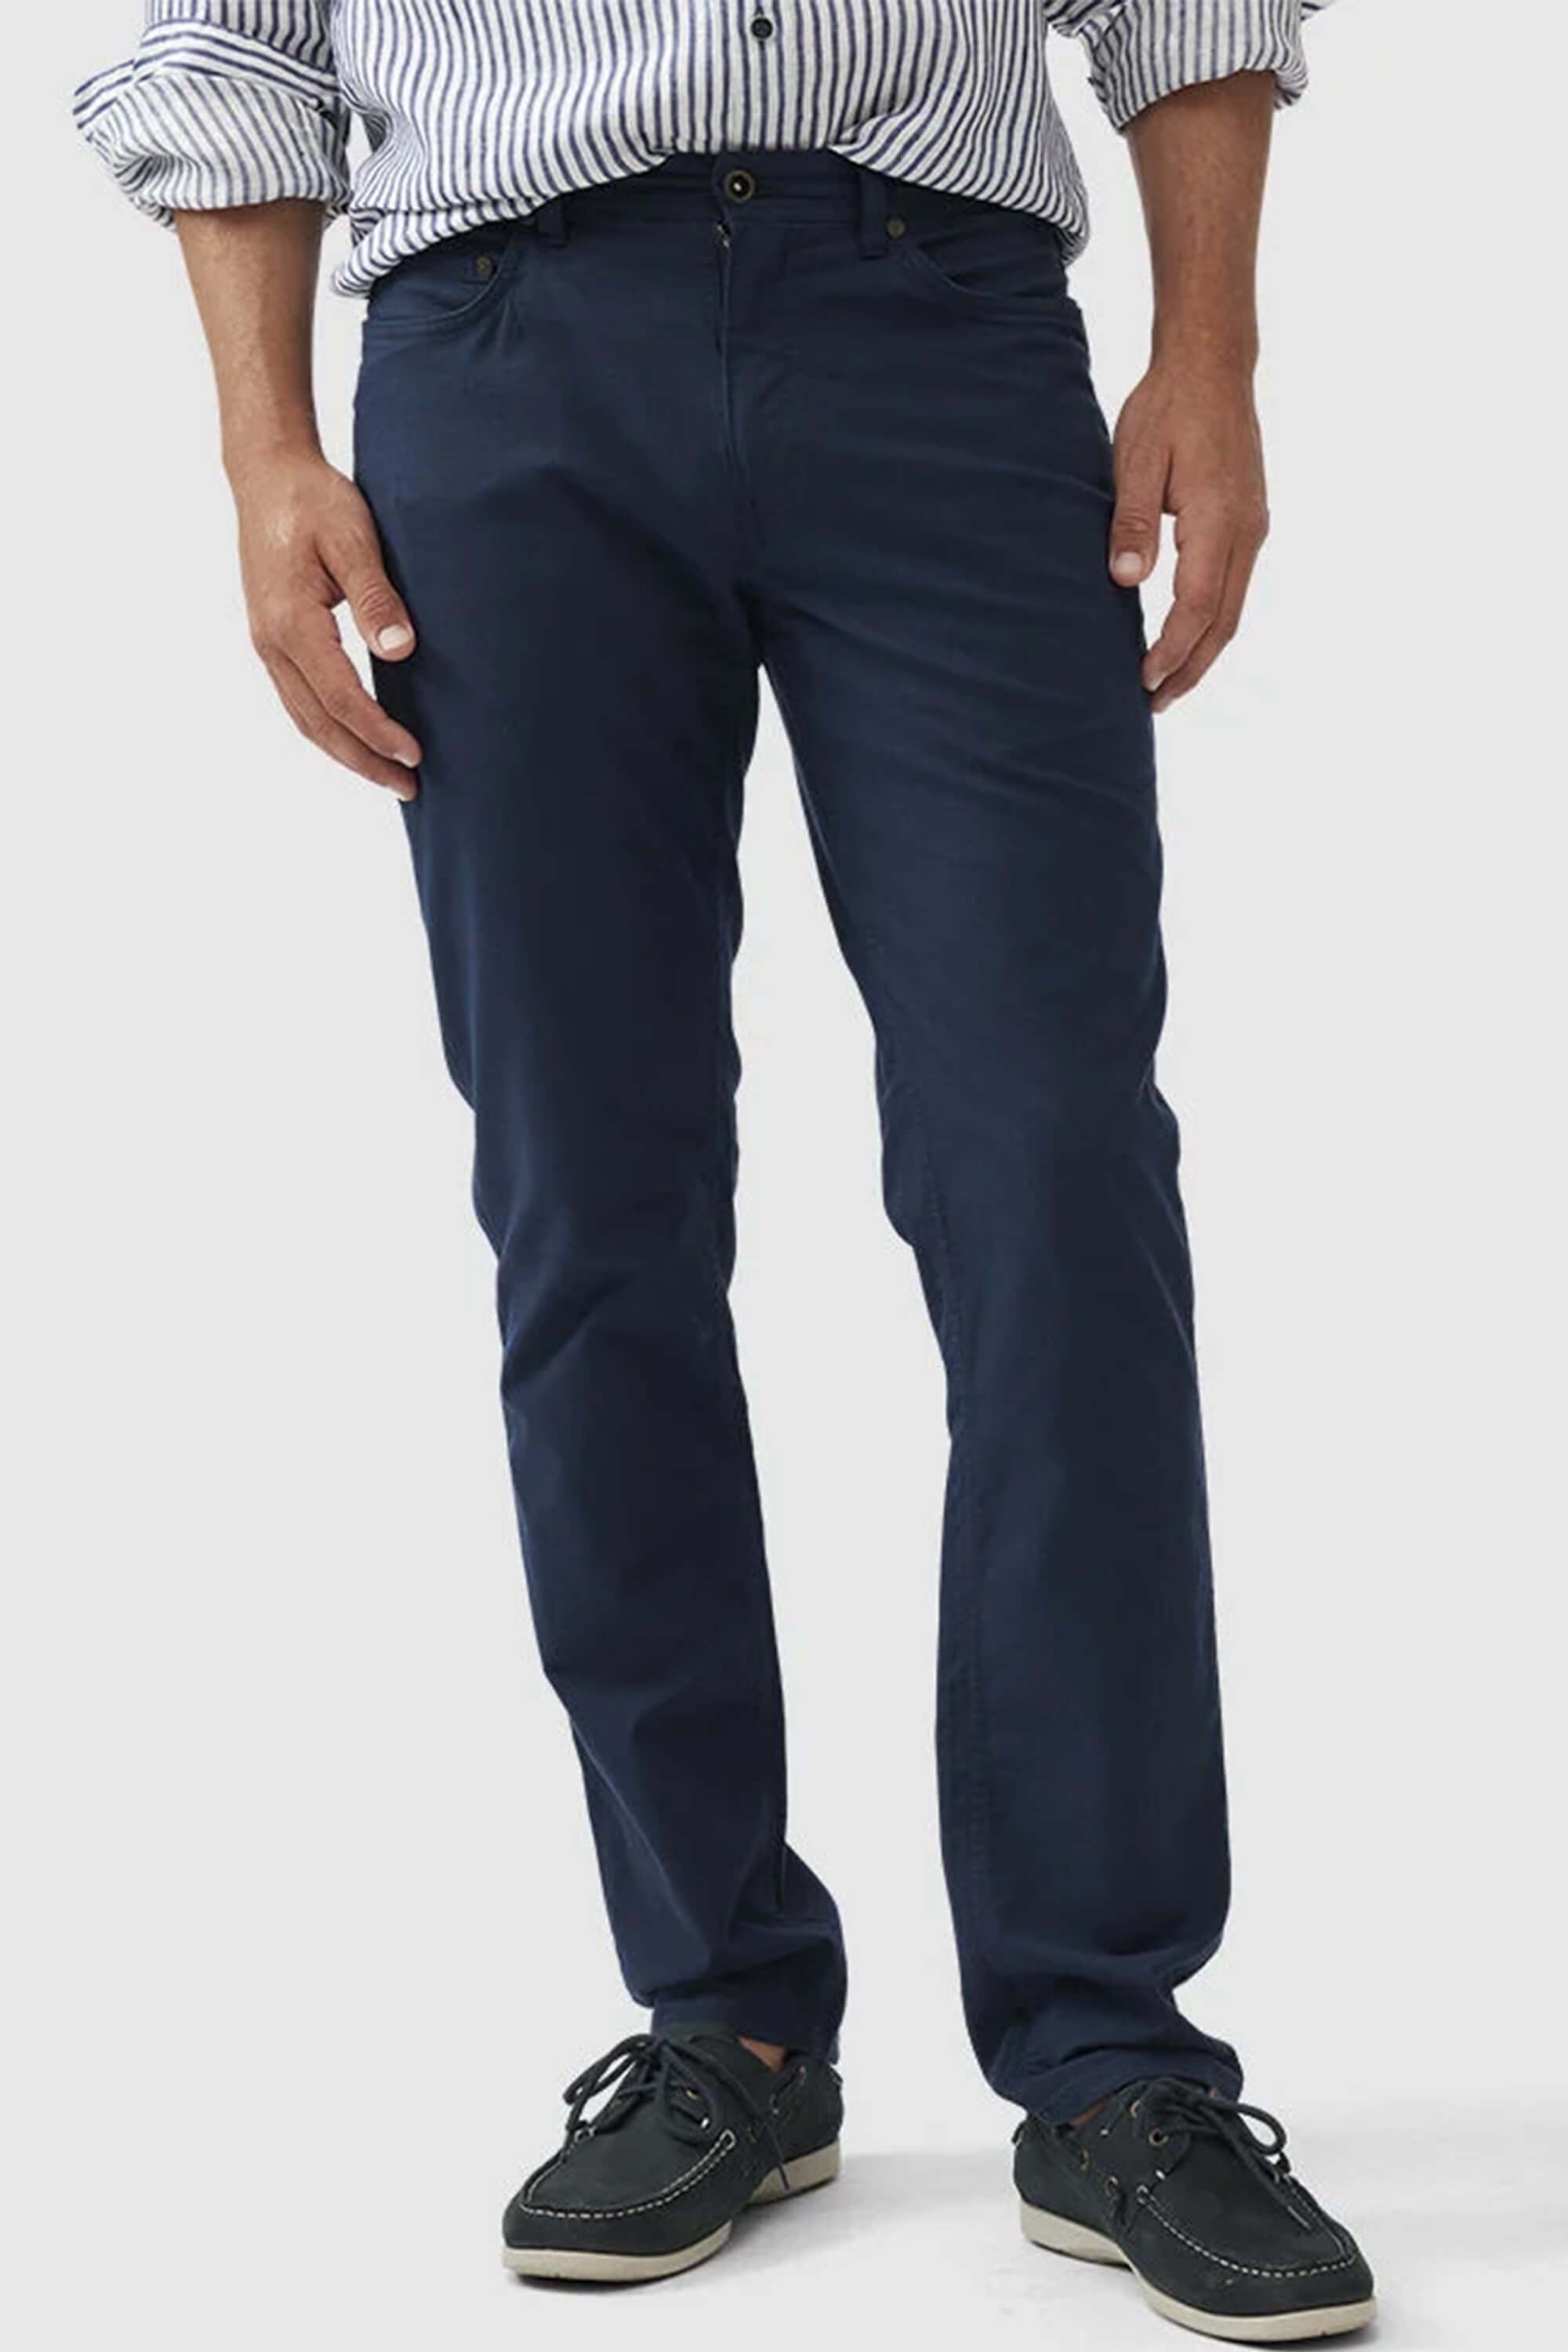 Rodd & Gunn Straight Fit Jeans Navy